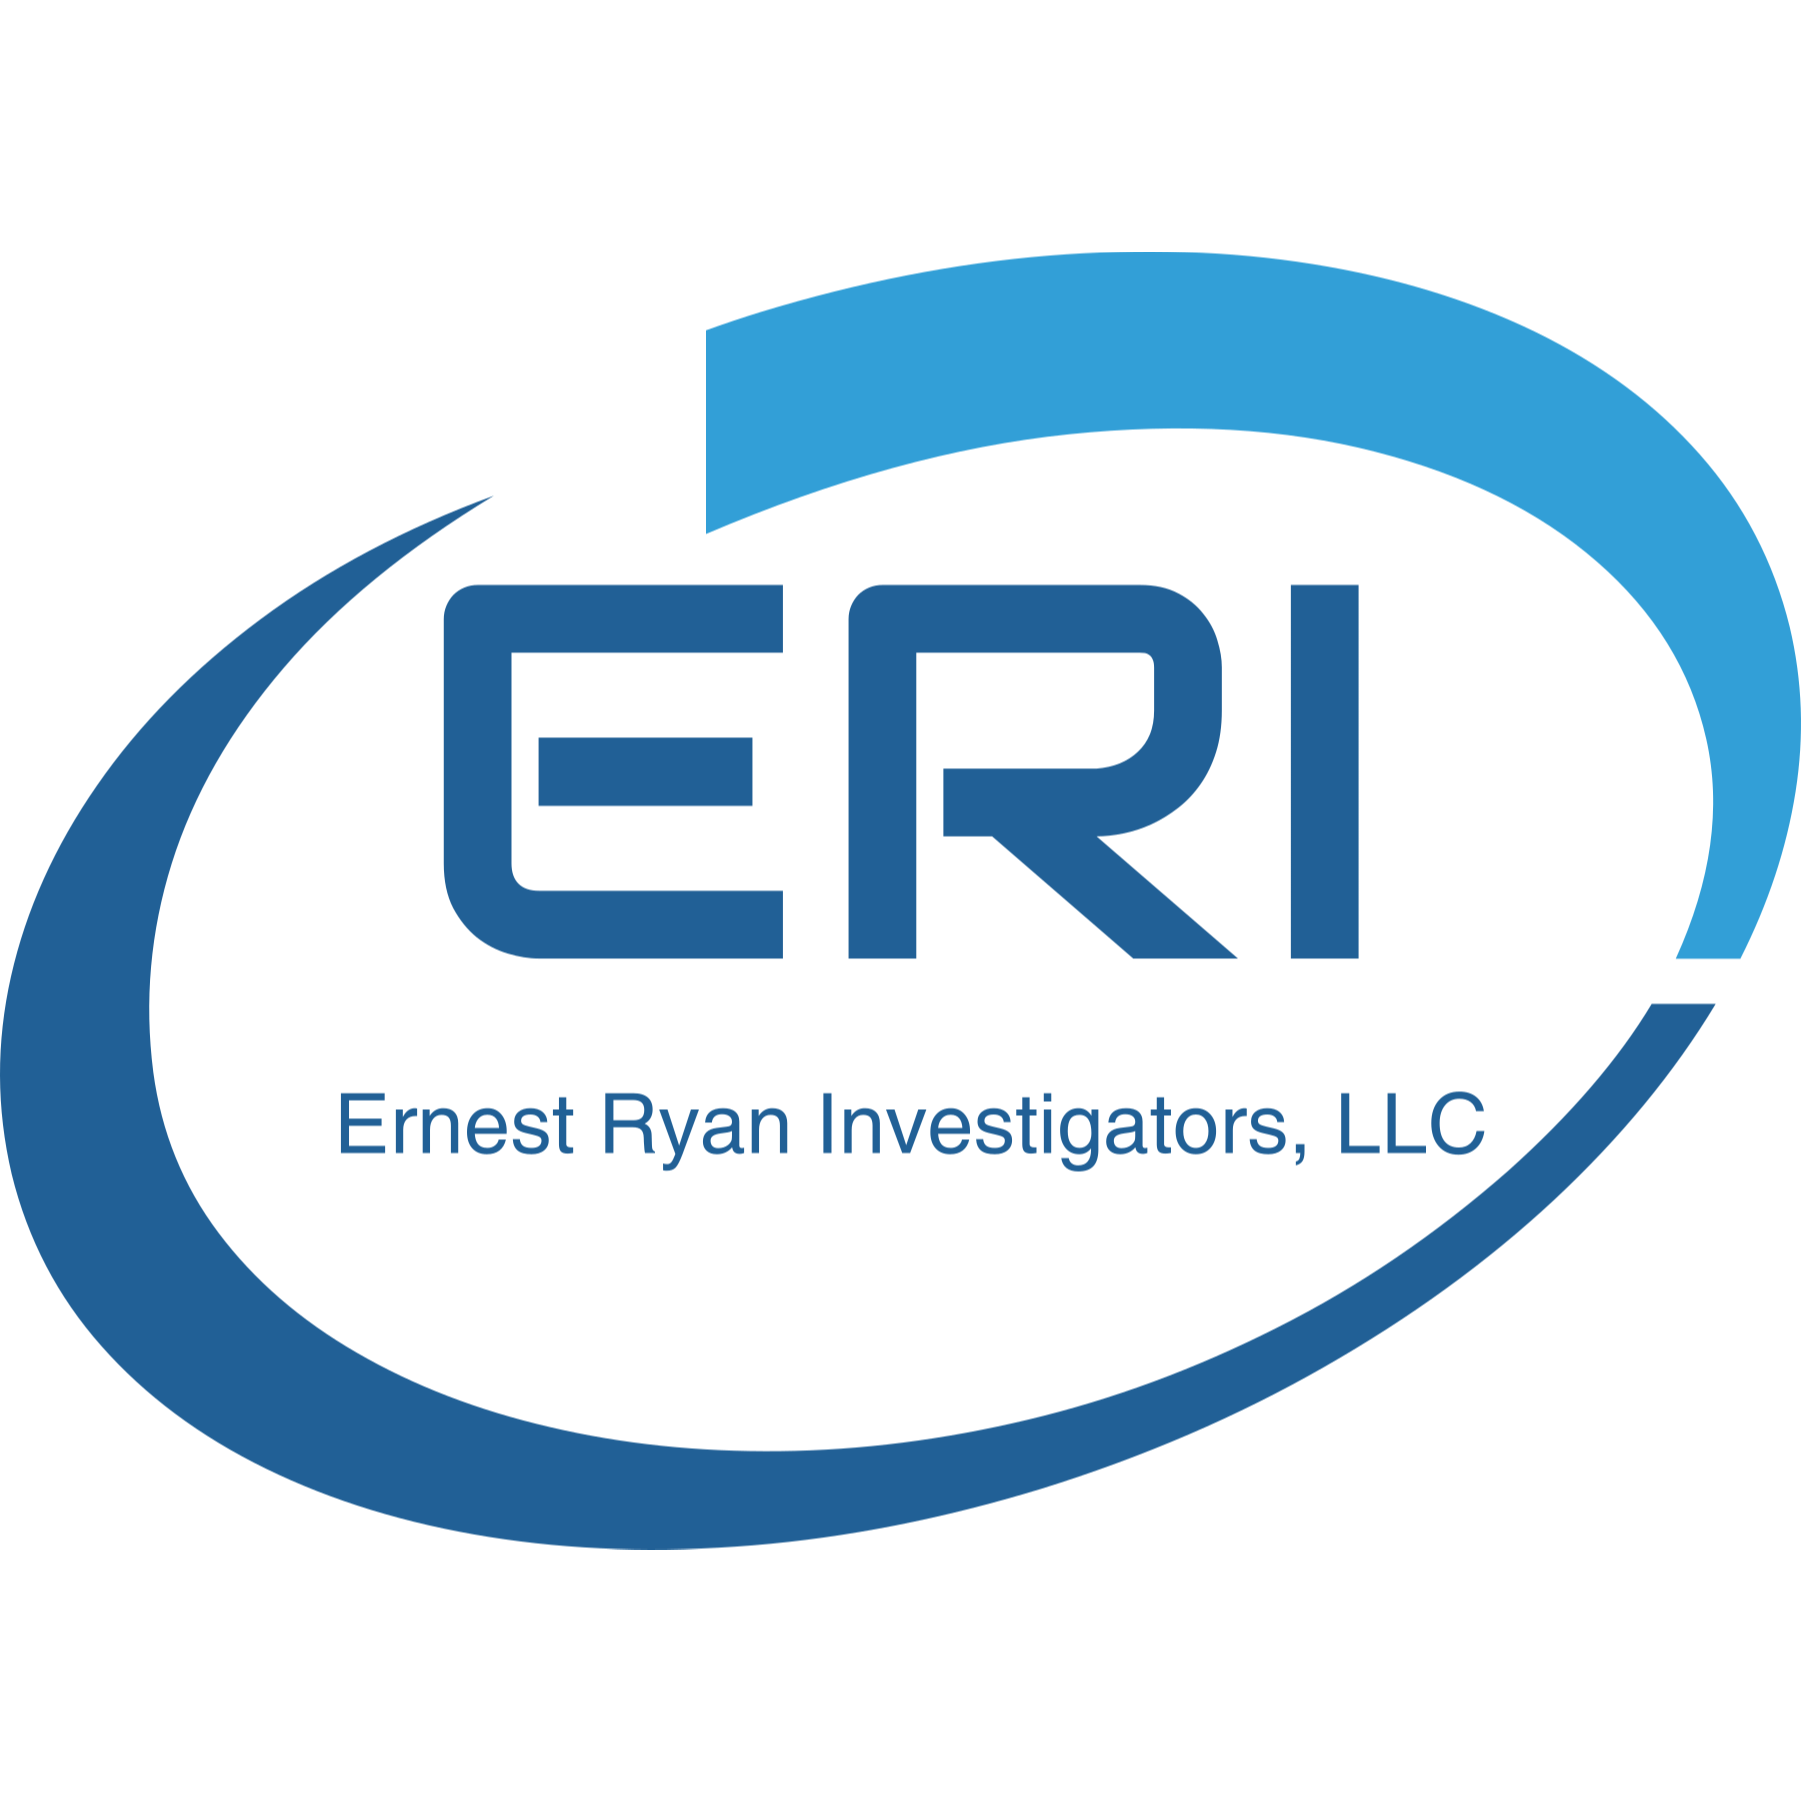 Ernest Ryan Investigators, LLC Logo